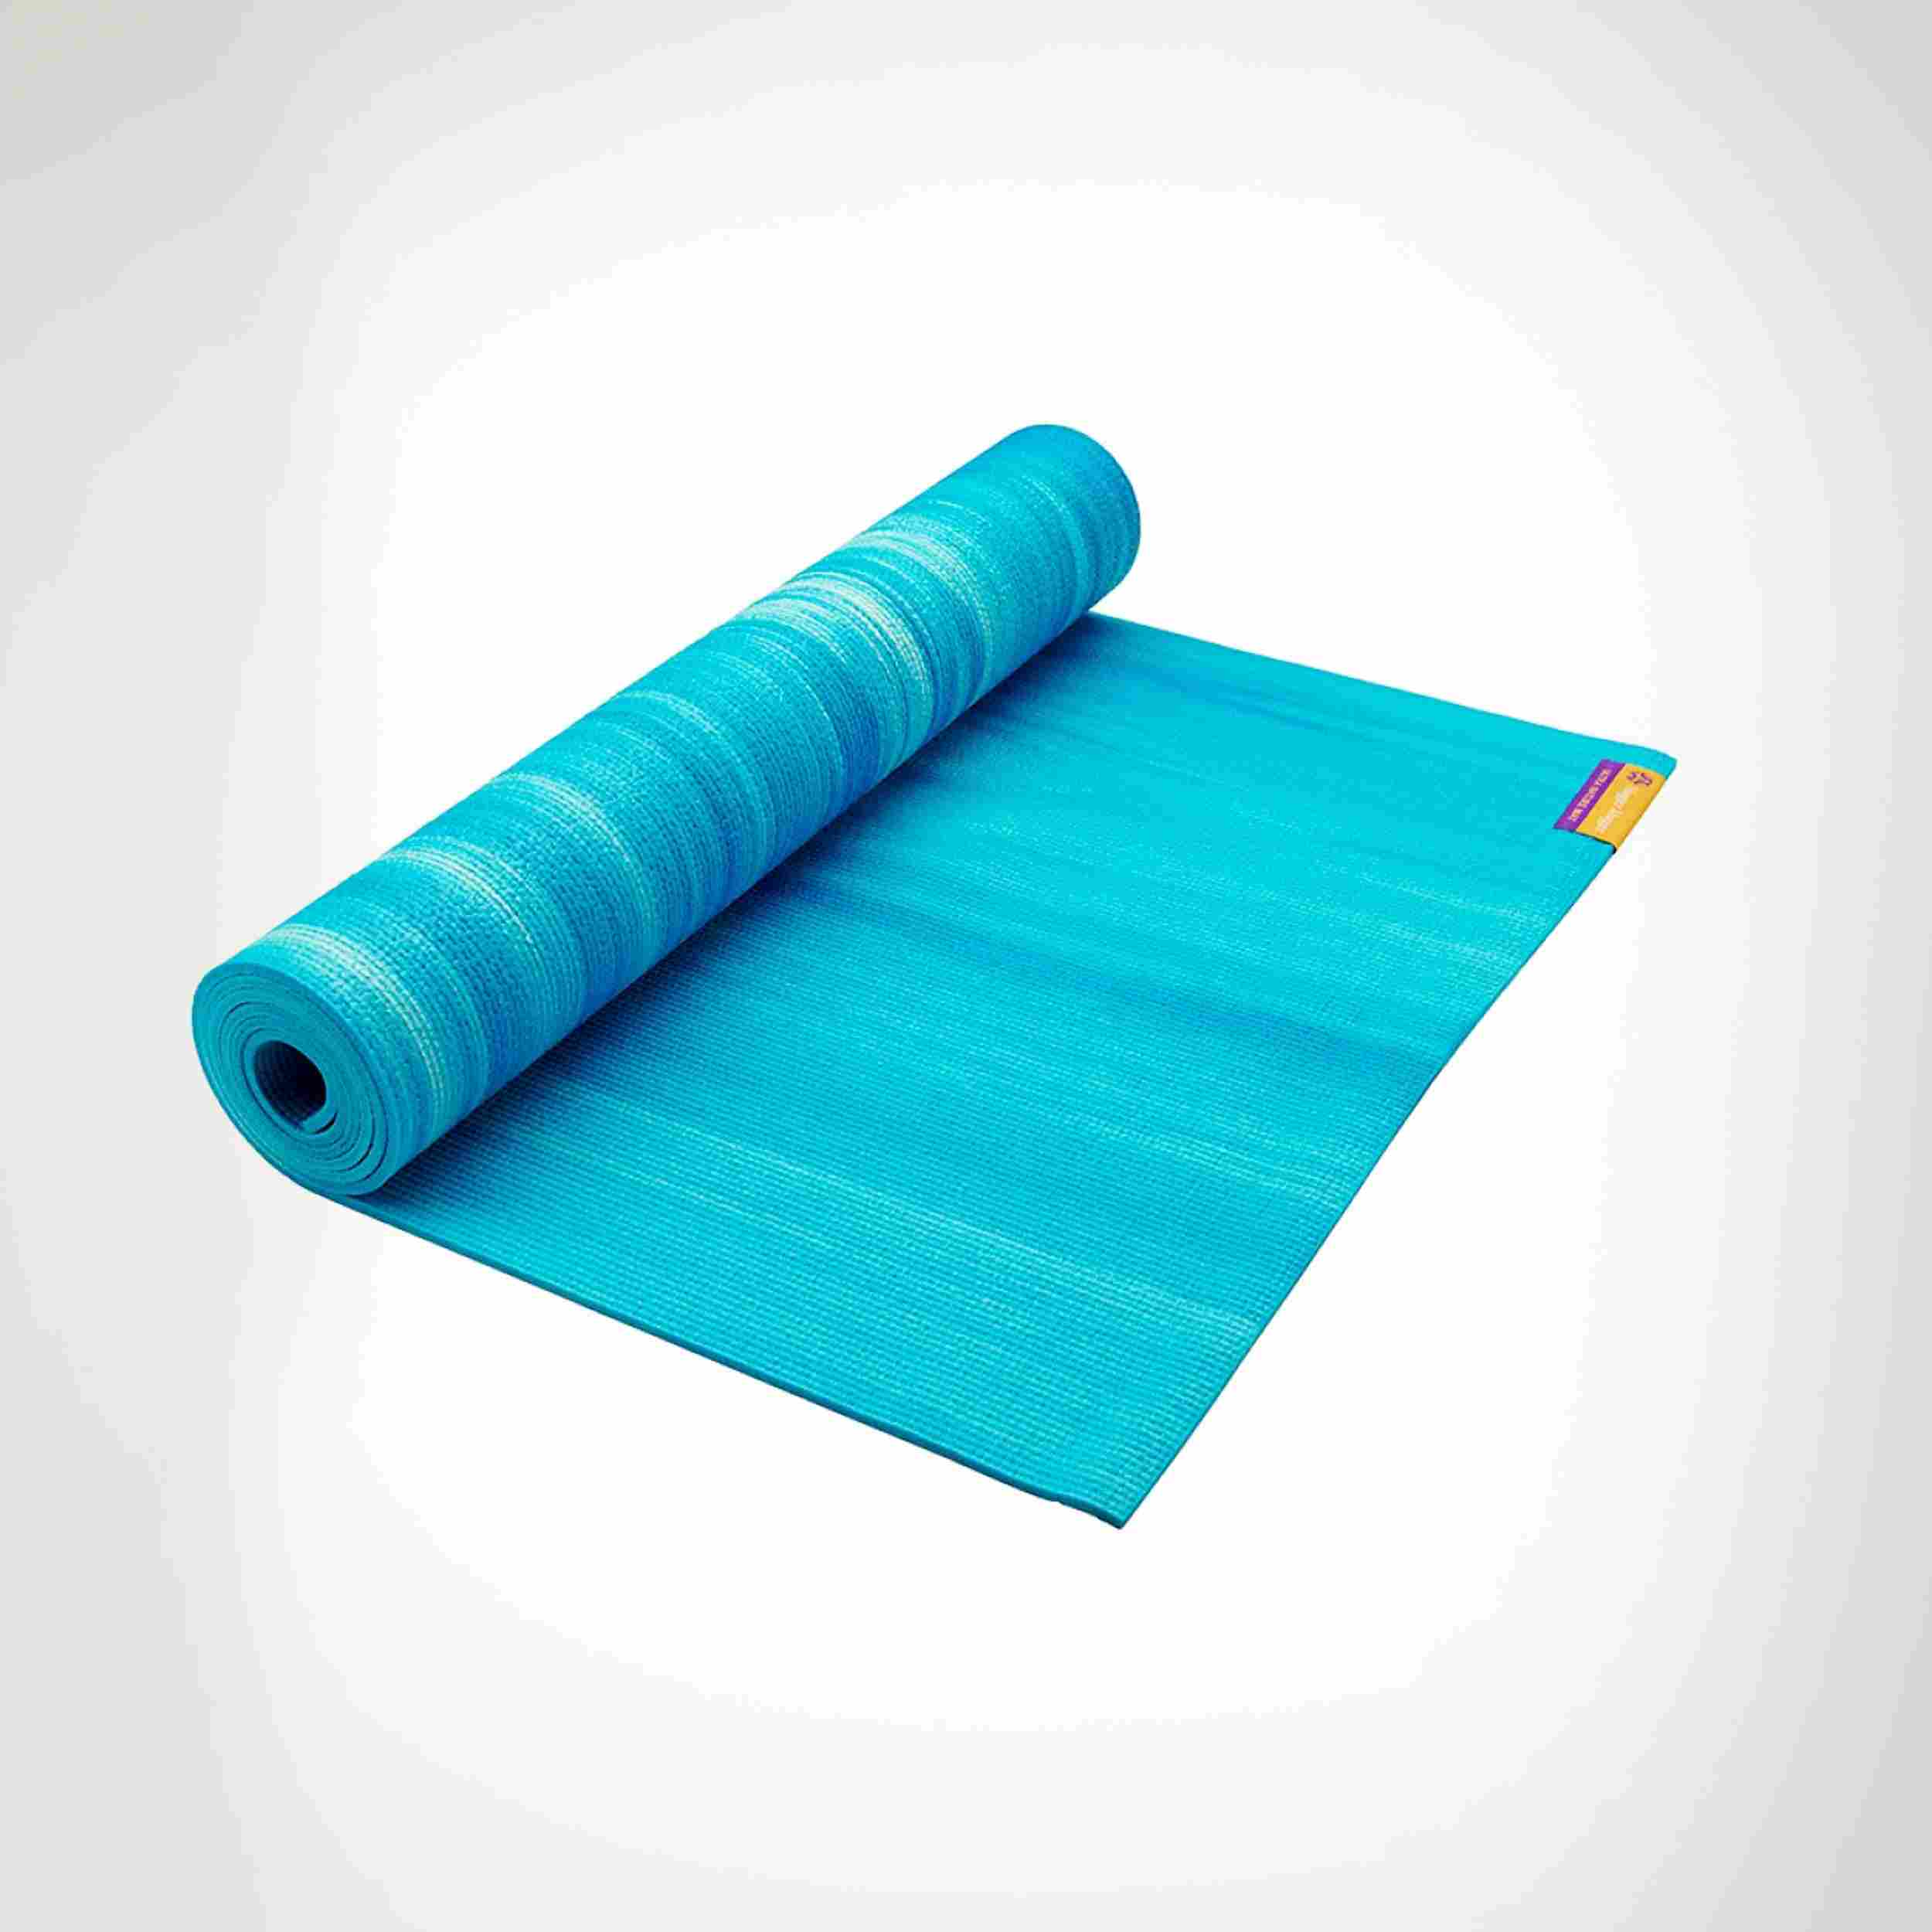 Blue yoga mat - nature